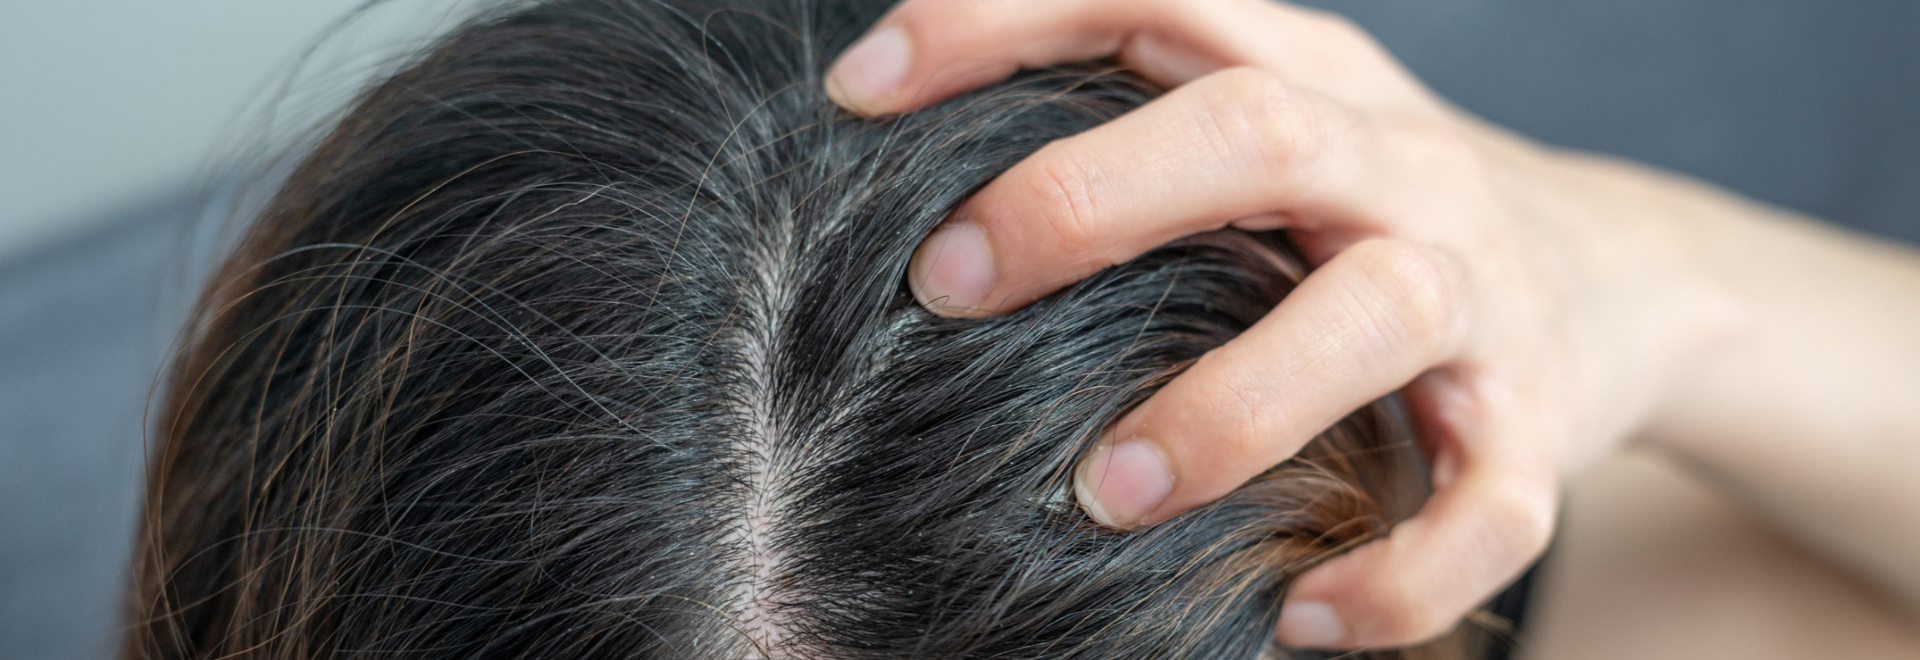 scalp-acne-causes-symptoms-treatment